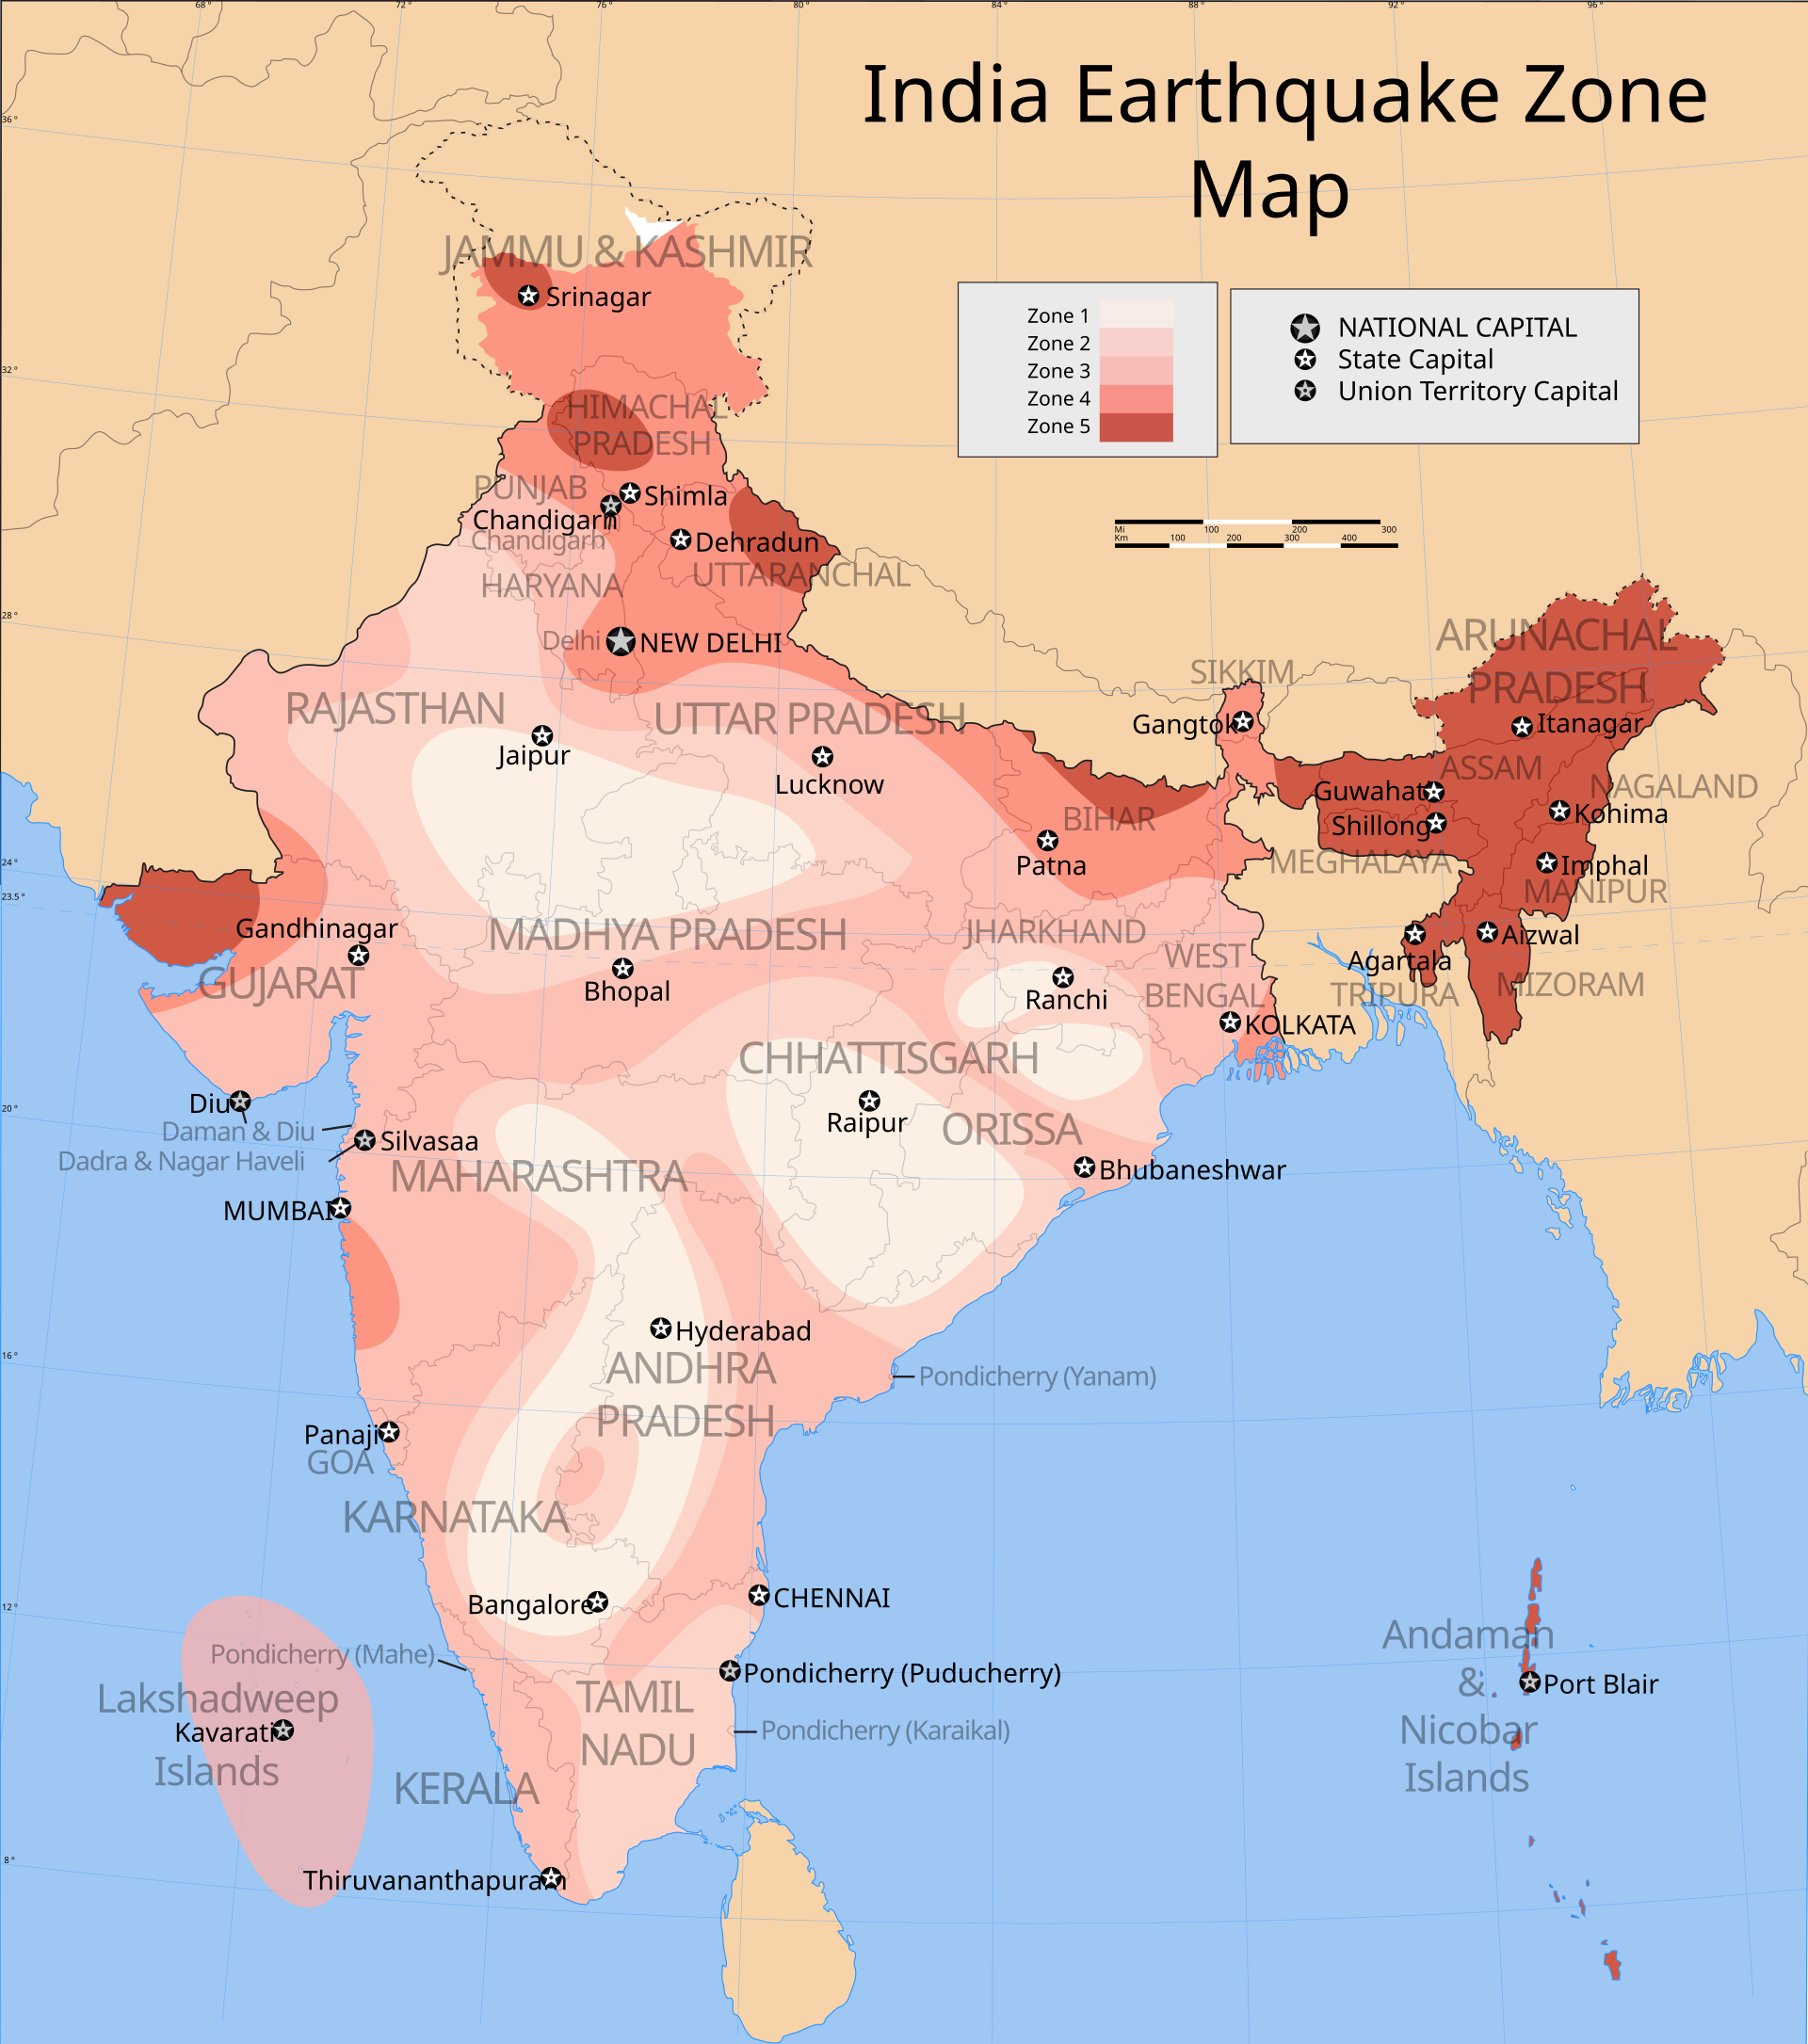 Earthquake zones of India - Wikipedia